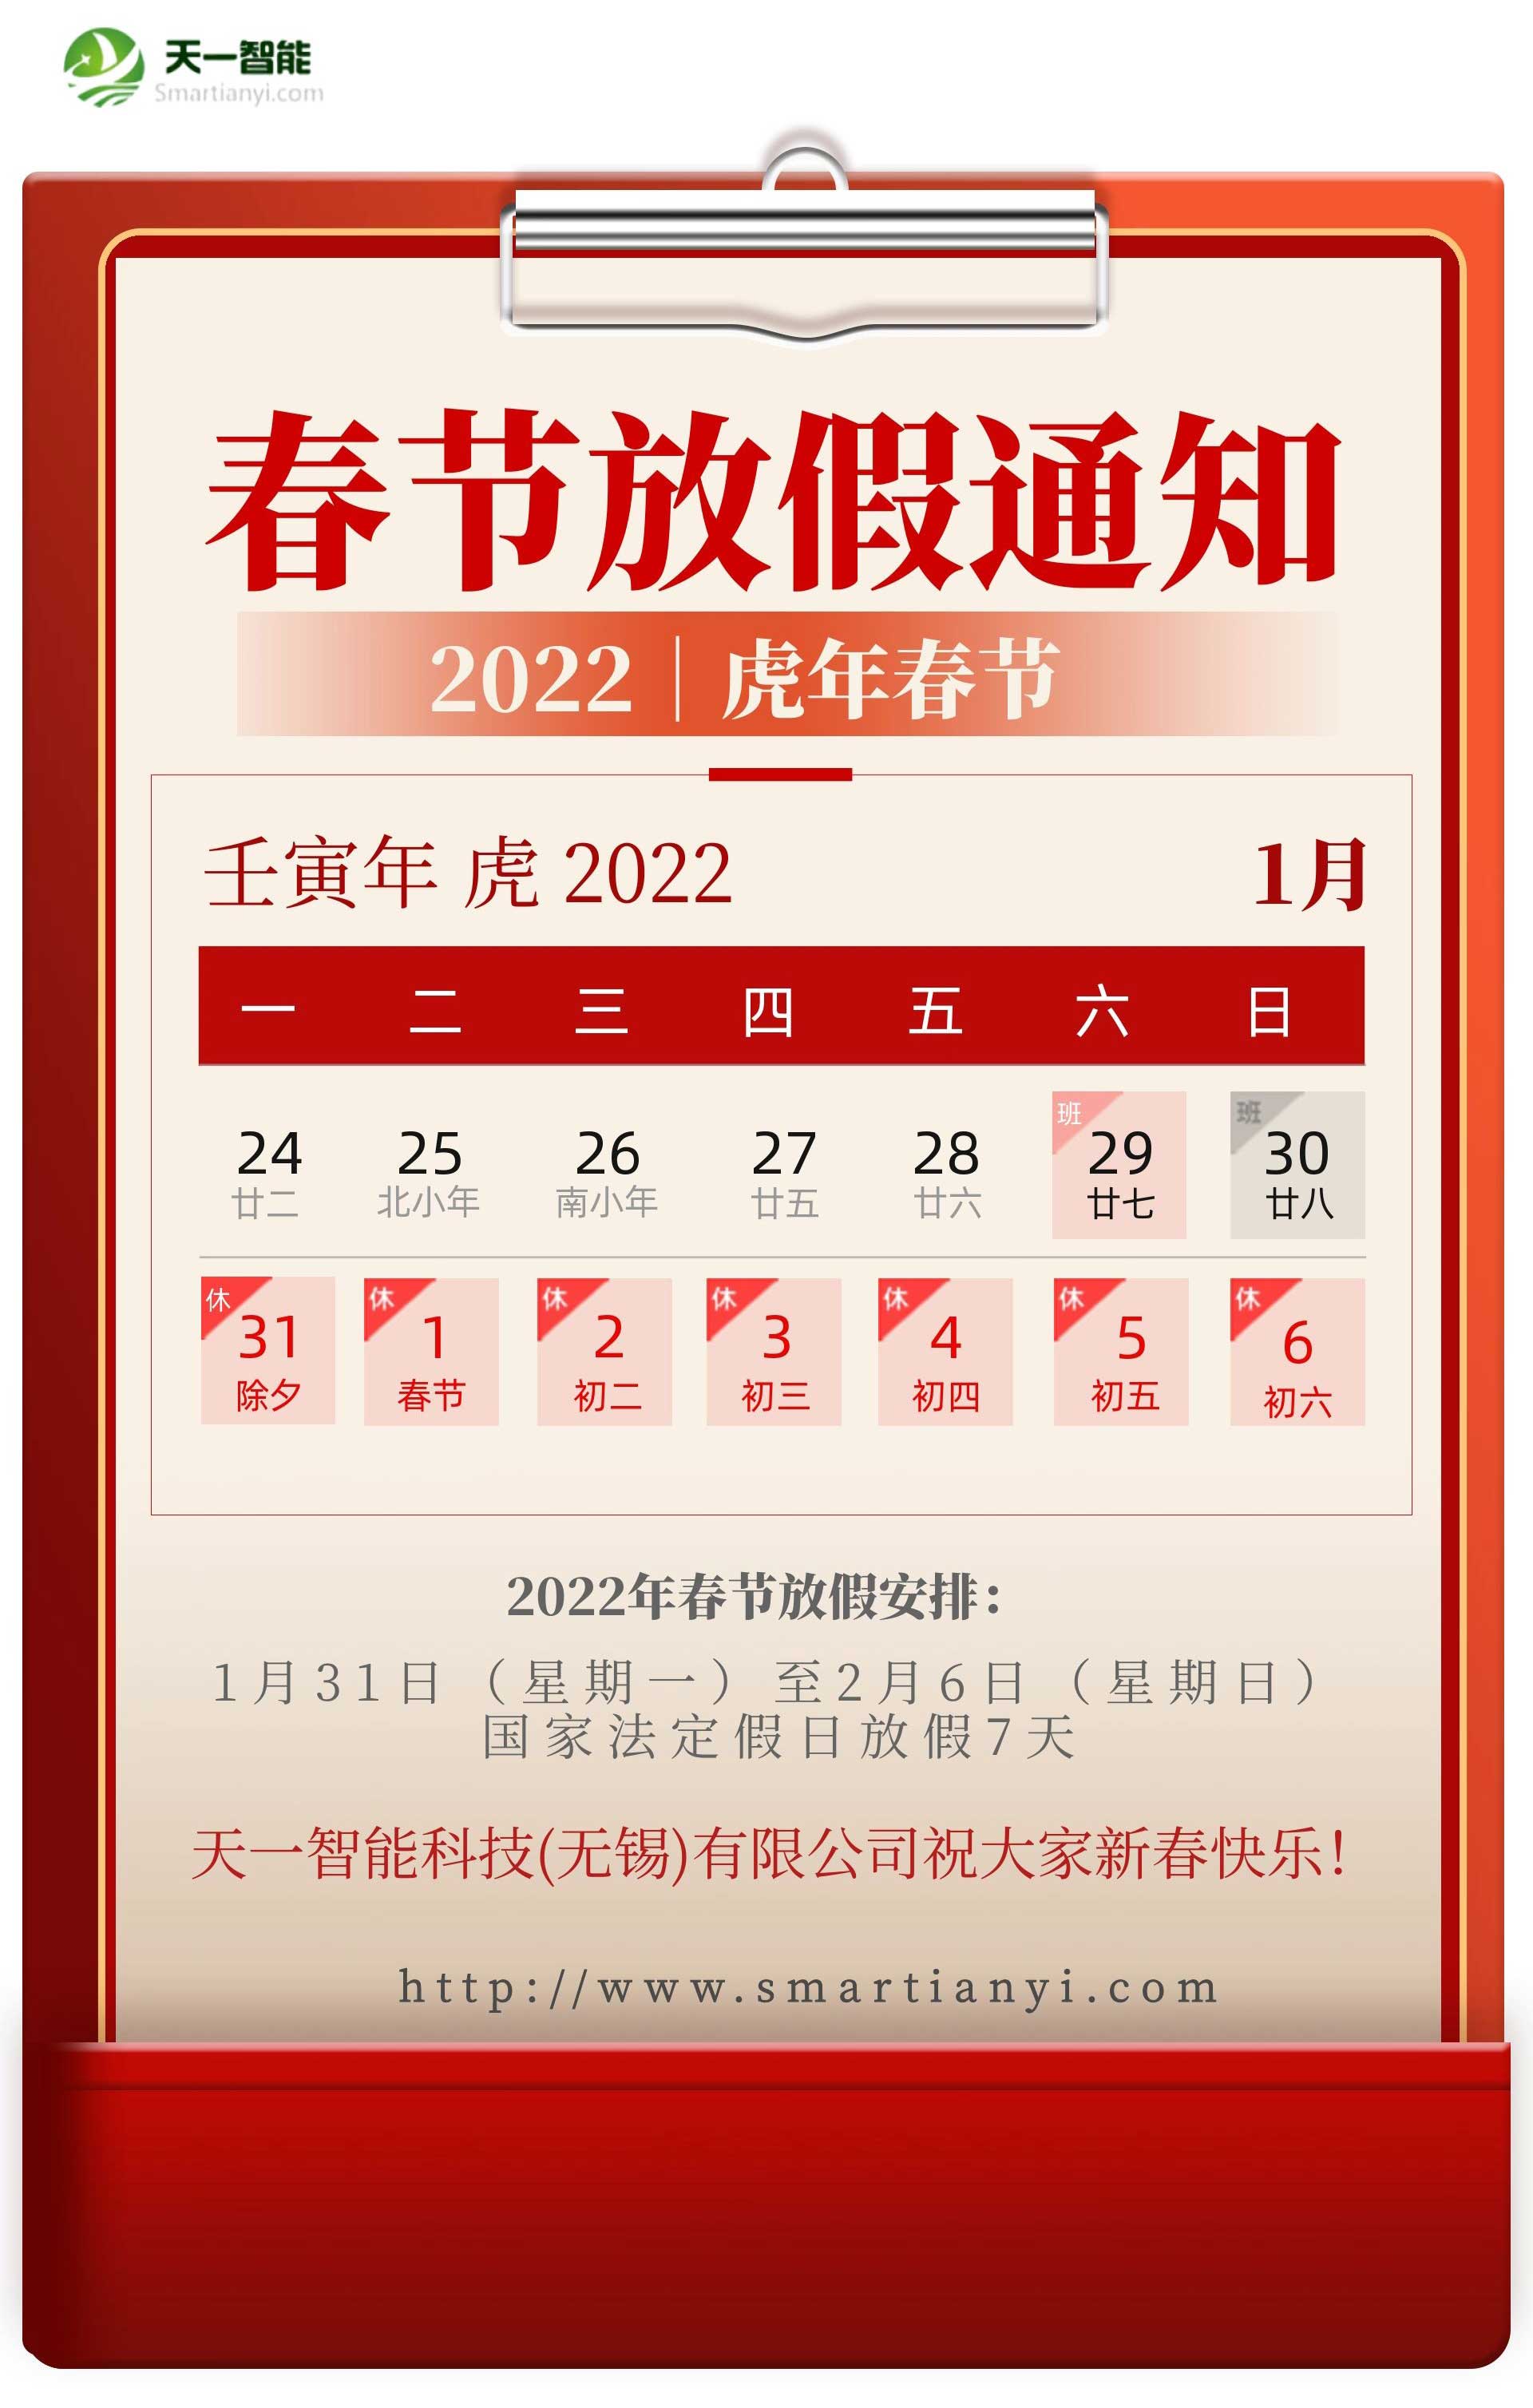 bat365官方网站(中国)有限公司关于2022年春节放假安排的通知